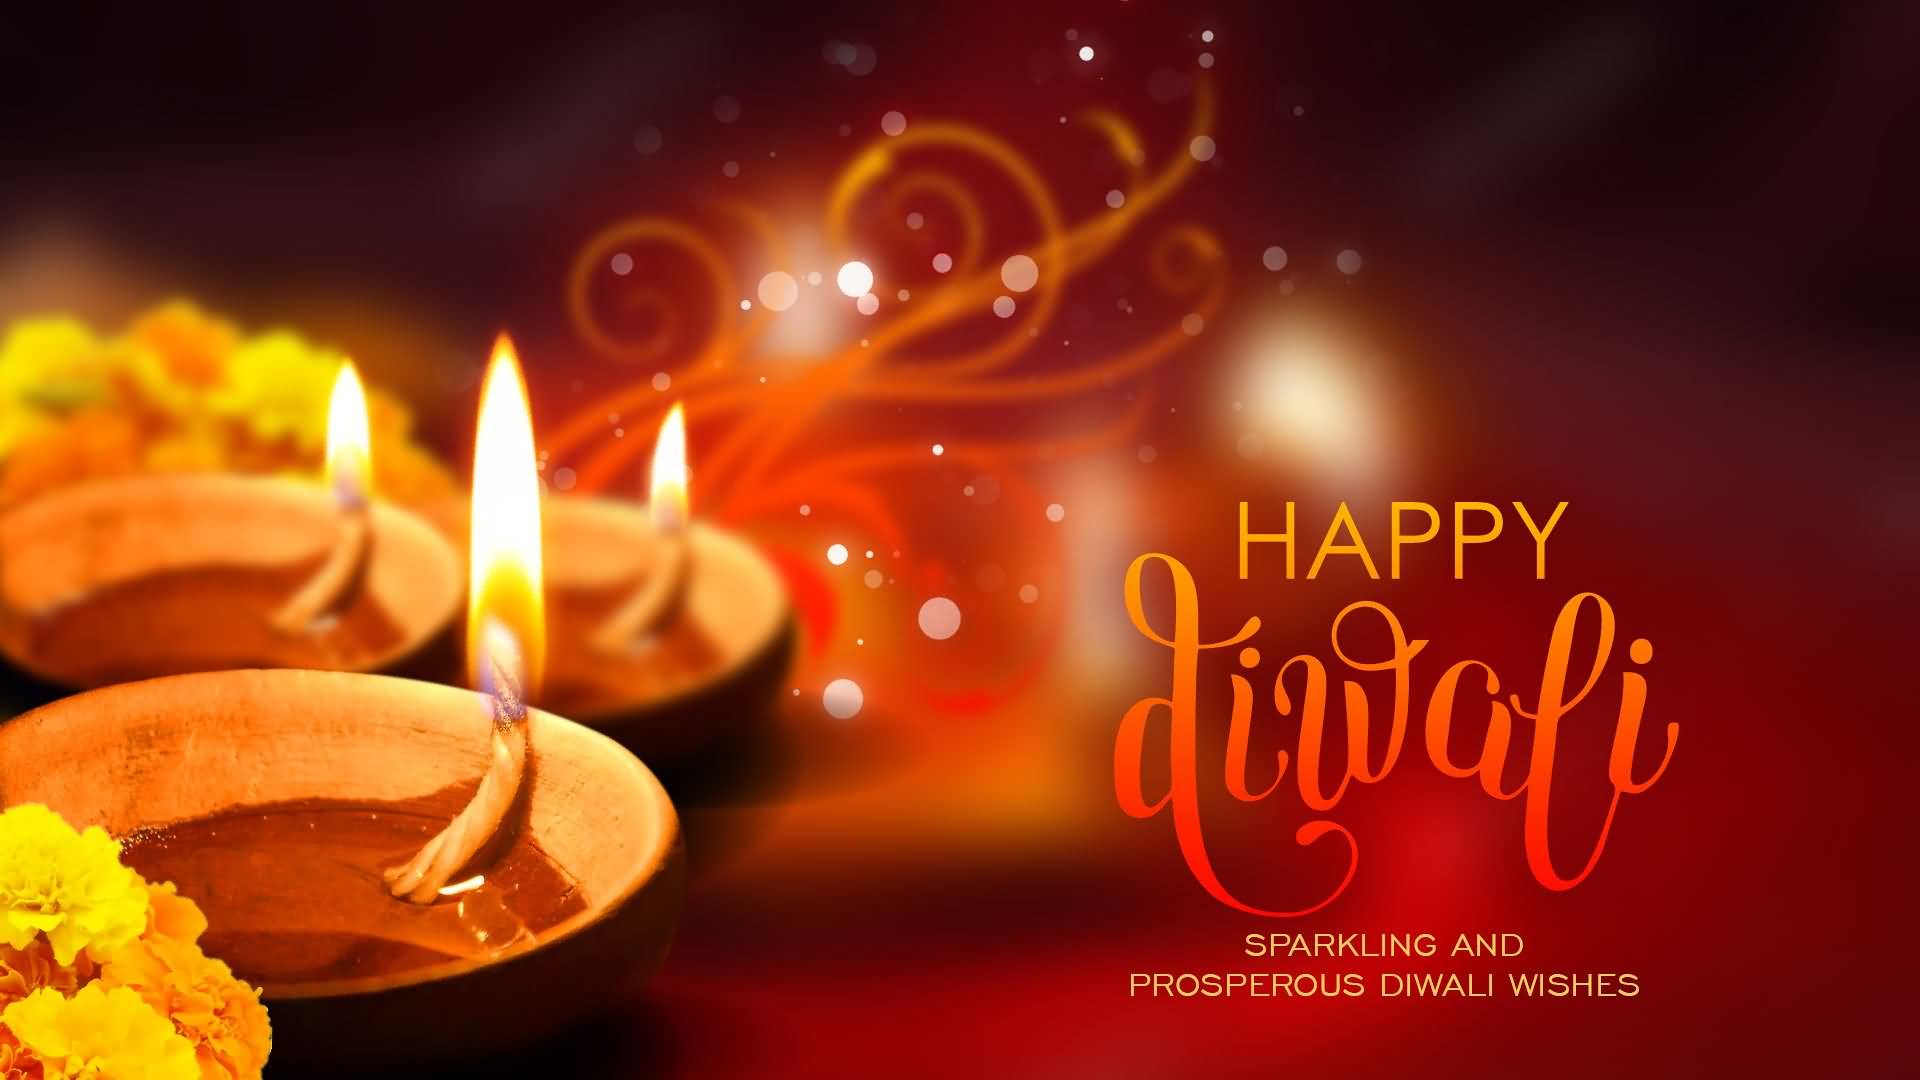 Sparkling And Prosperous Diwali Diwali Greetings